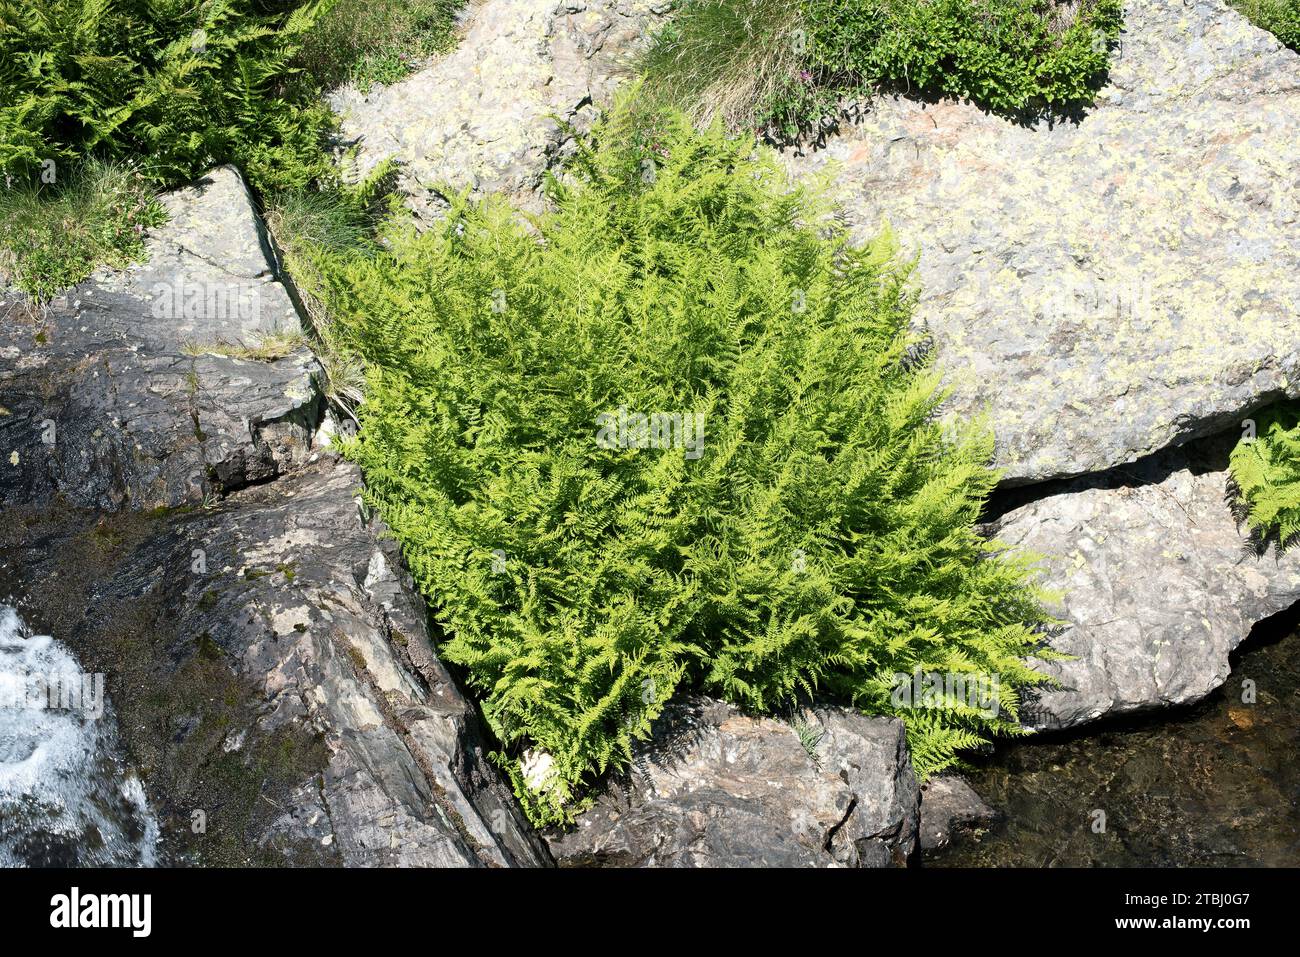 Lady fern (Athyrium filix-femina) is a fern native to Northern Hemisphere. This photo was taken in Andorra. Stock Photo